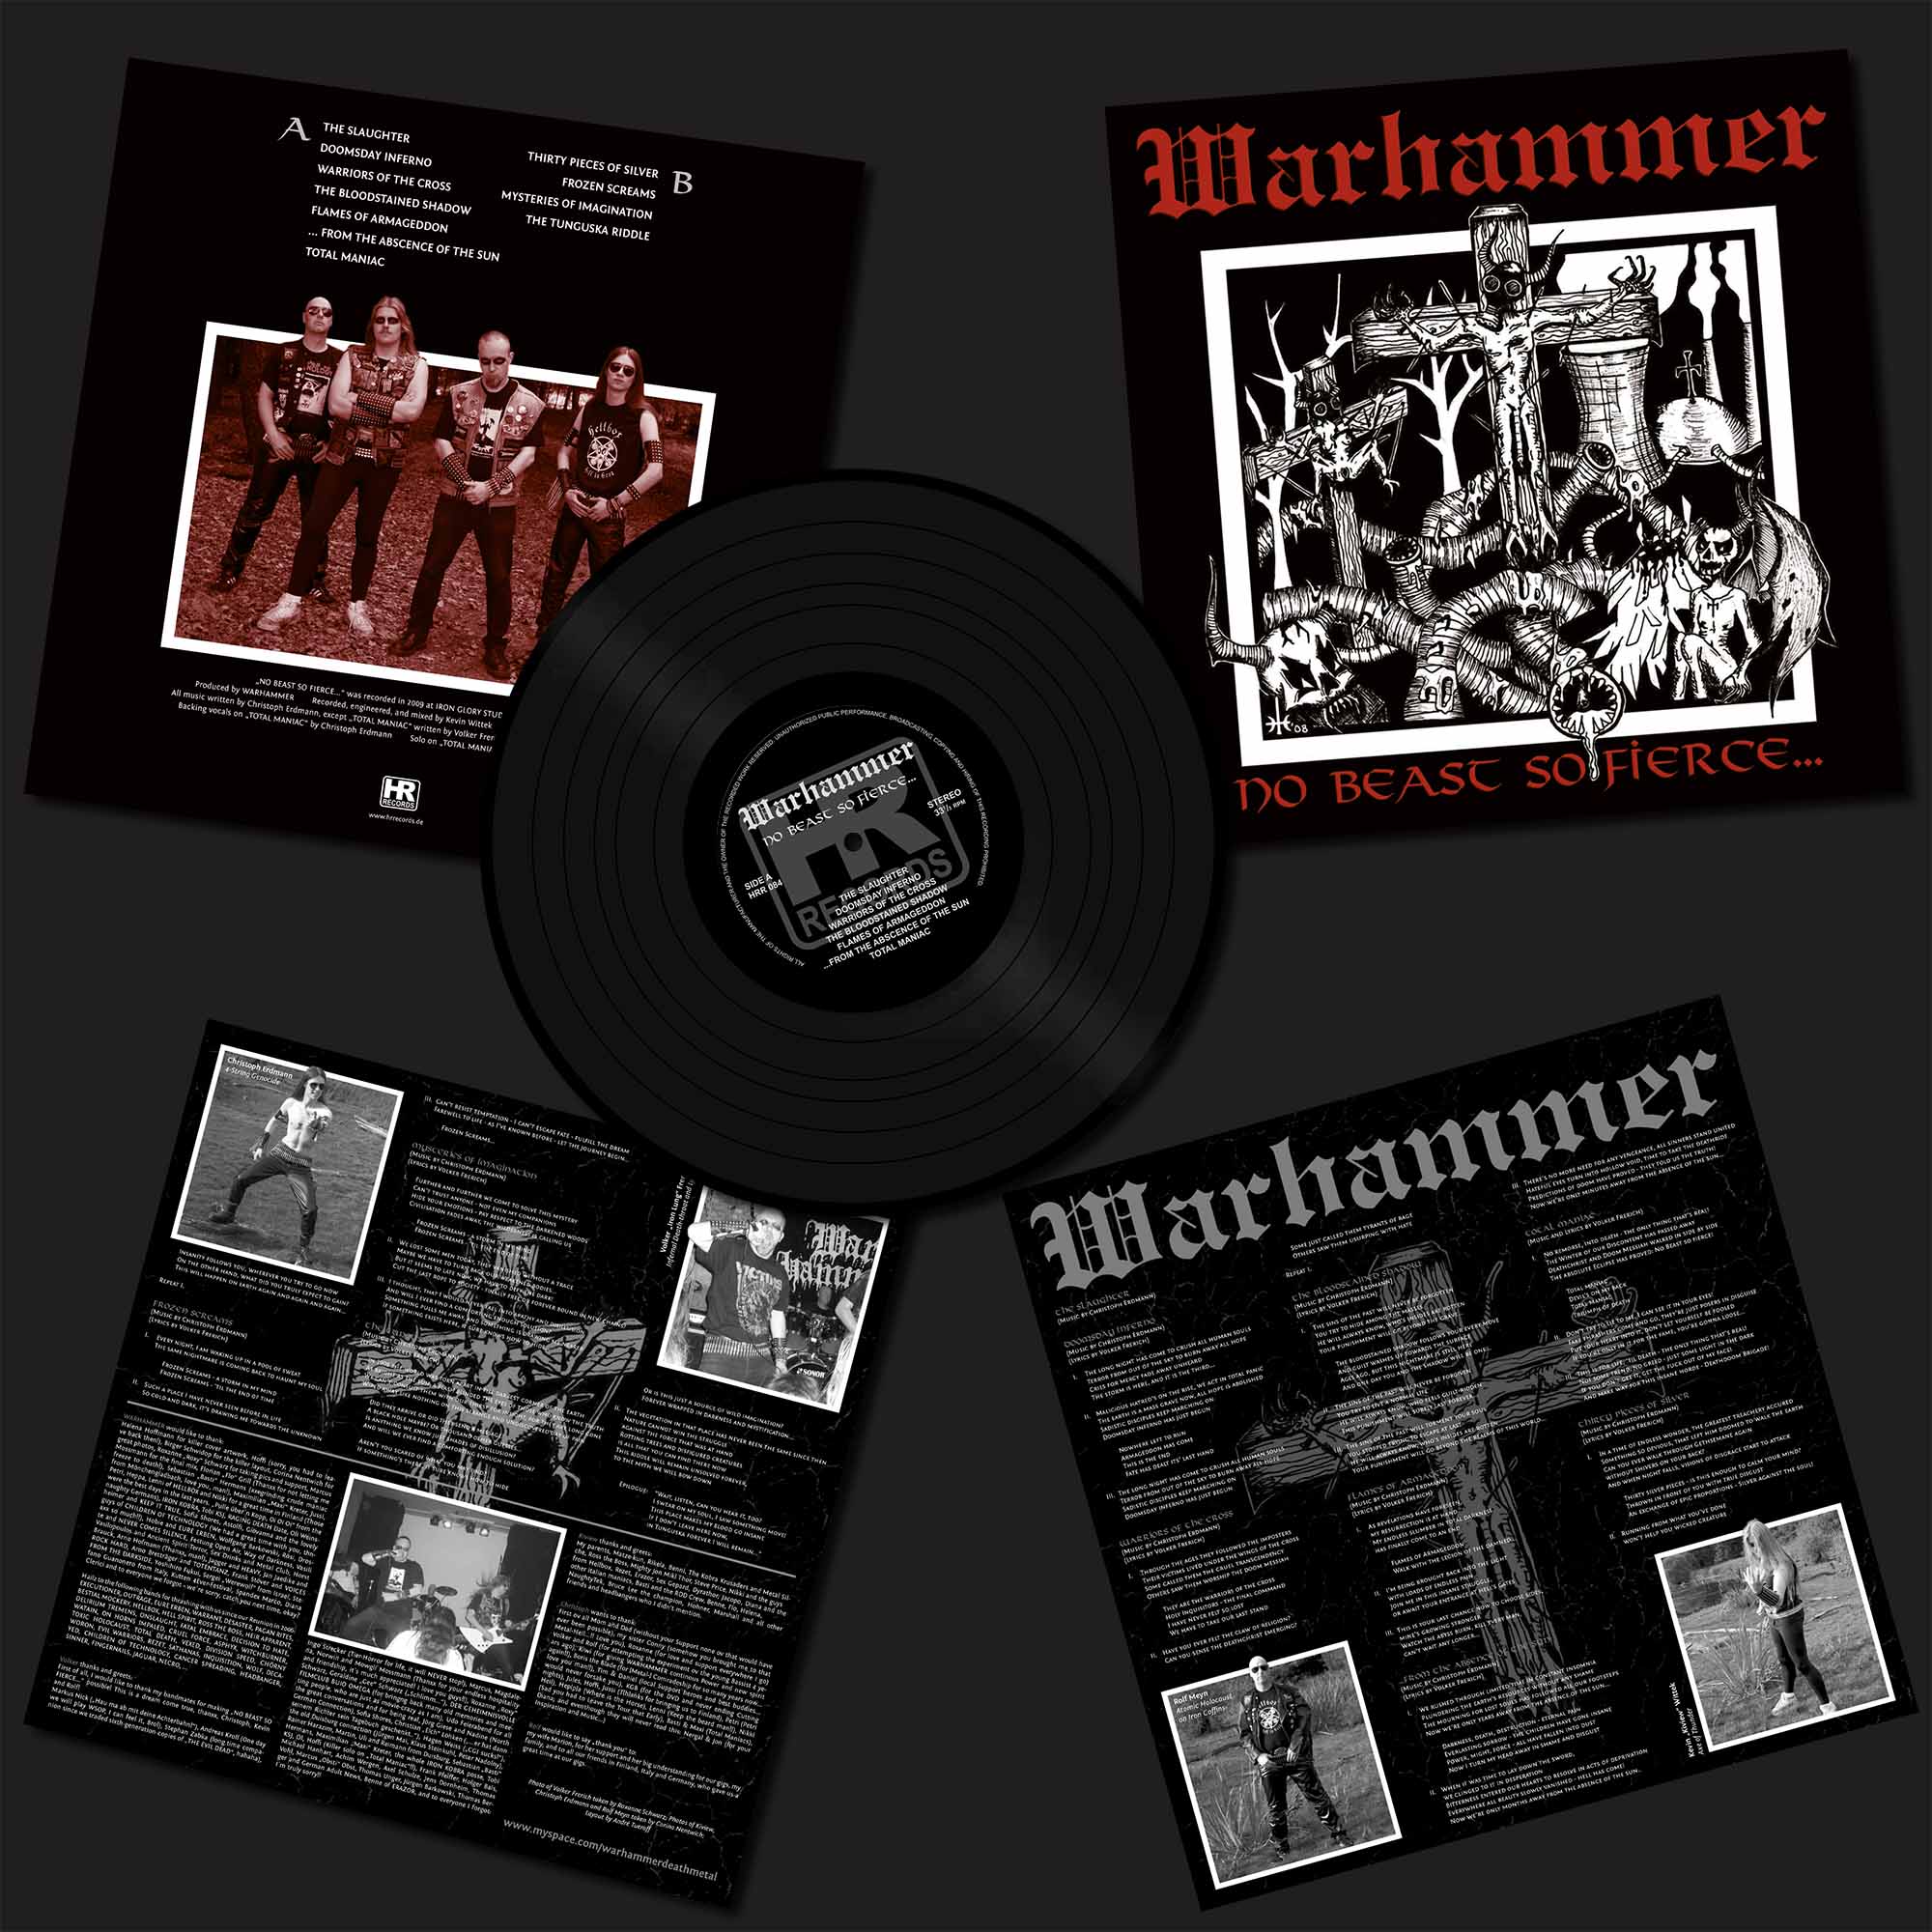 WARHAMMER - No Beast so Fierce...LP